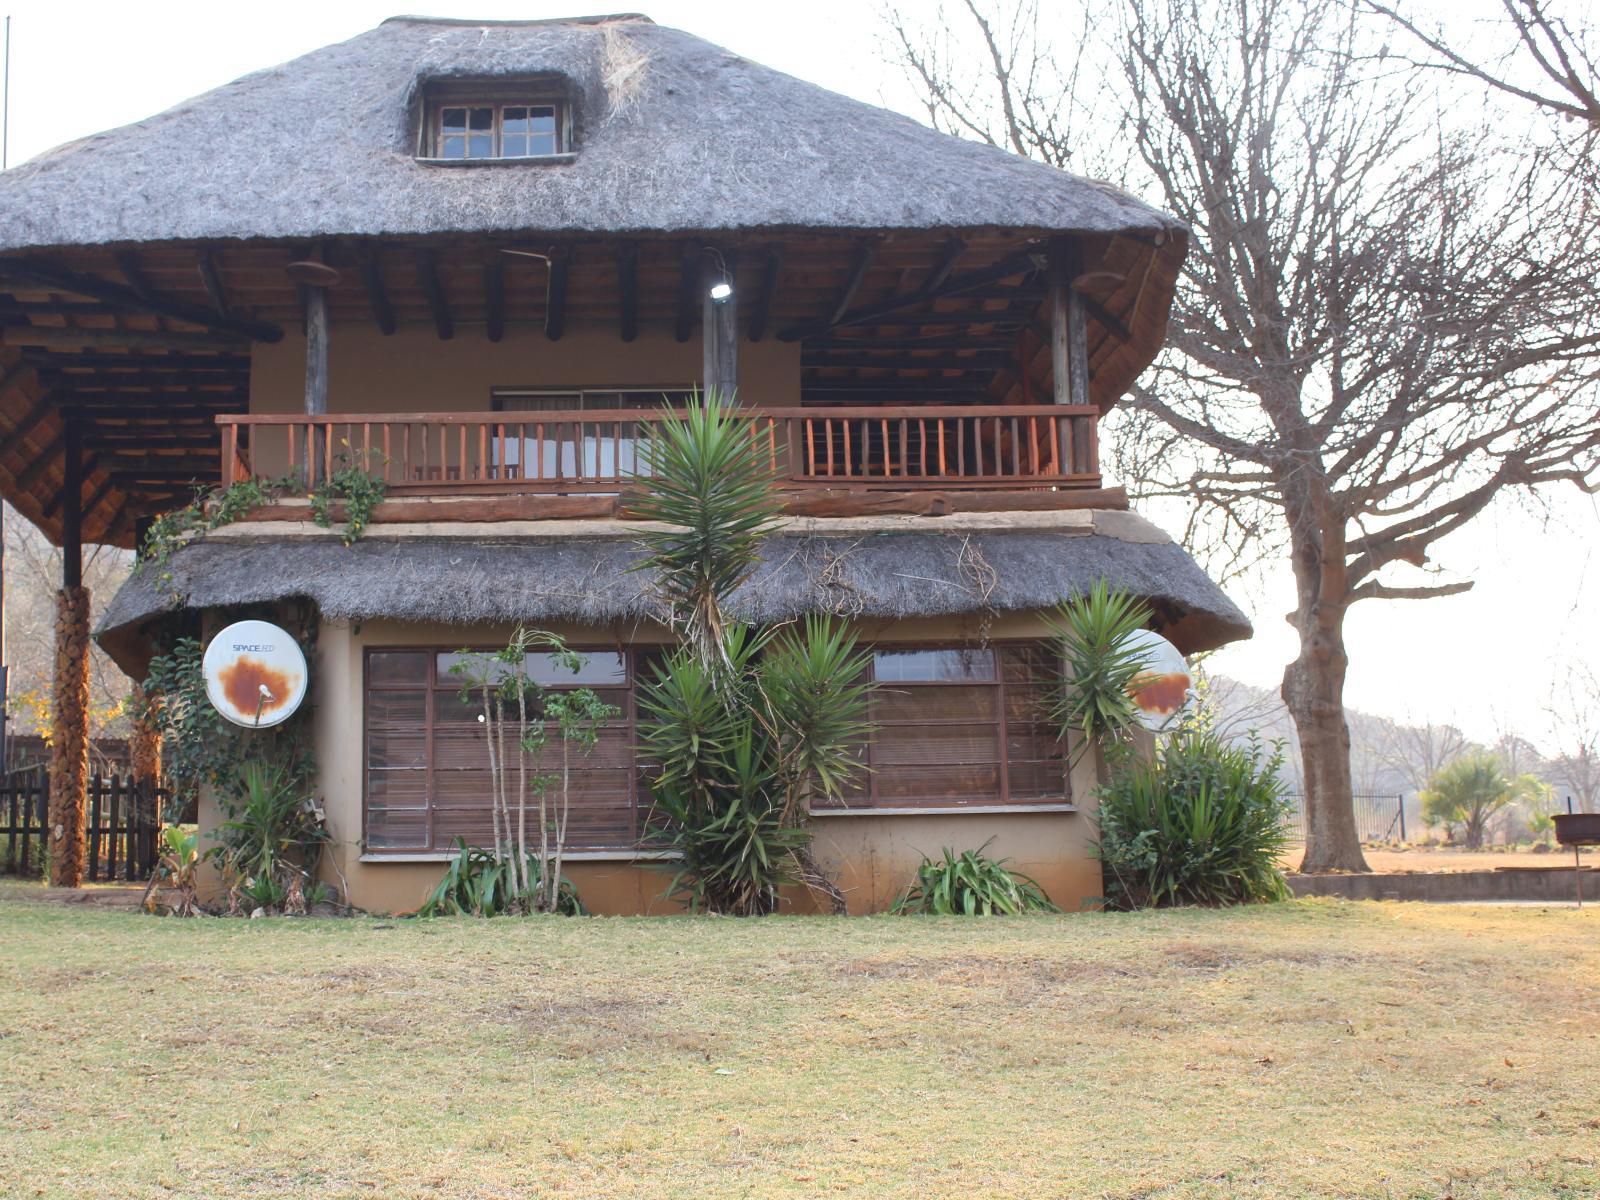 Emahlathini Farm Lodge Piet Retief Mpumalanga South Africa House, Building, Architecture